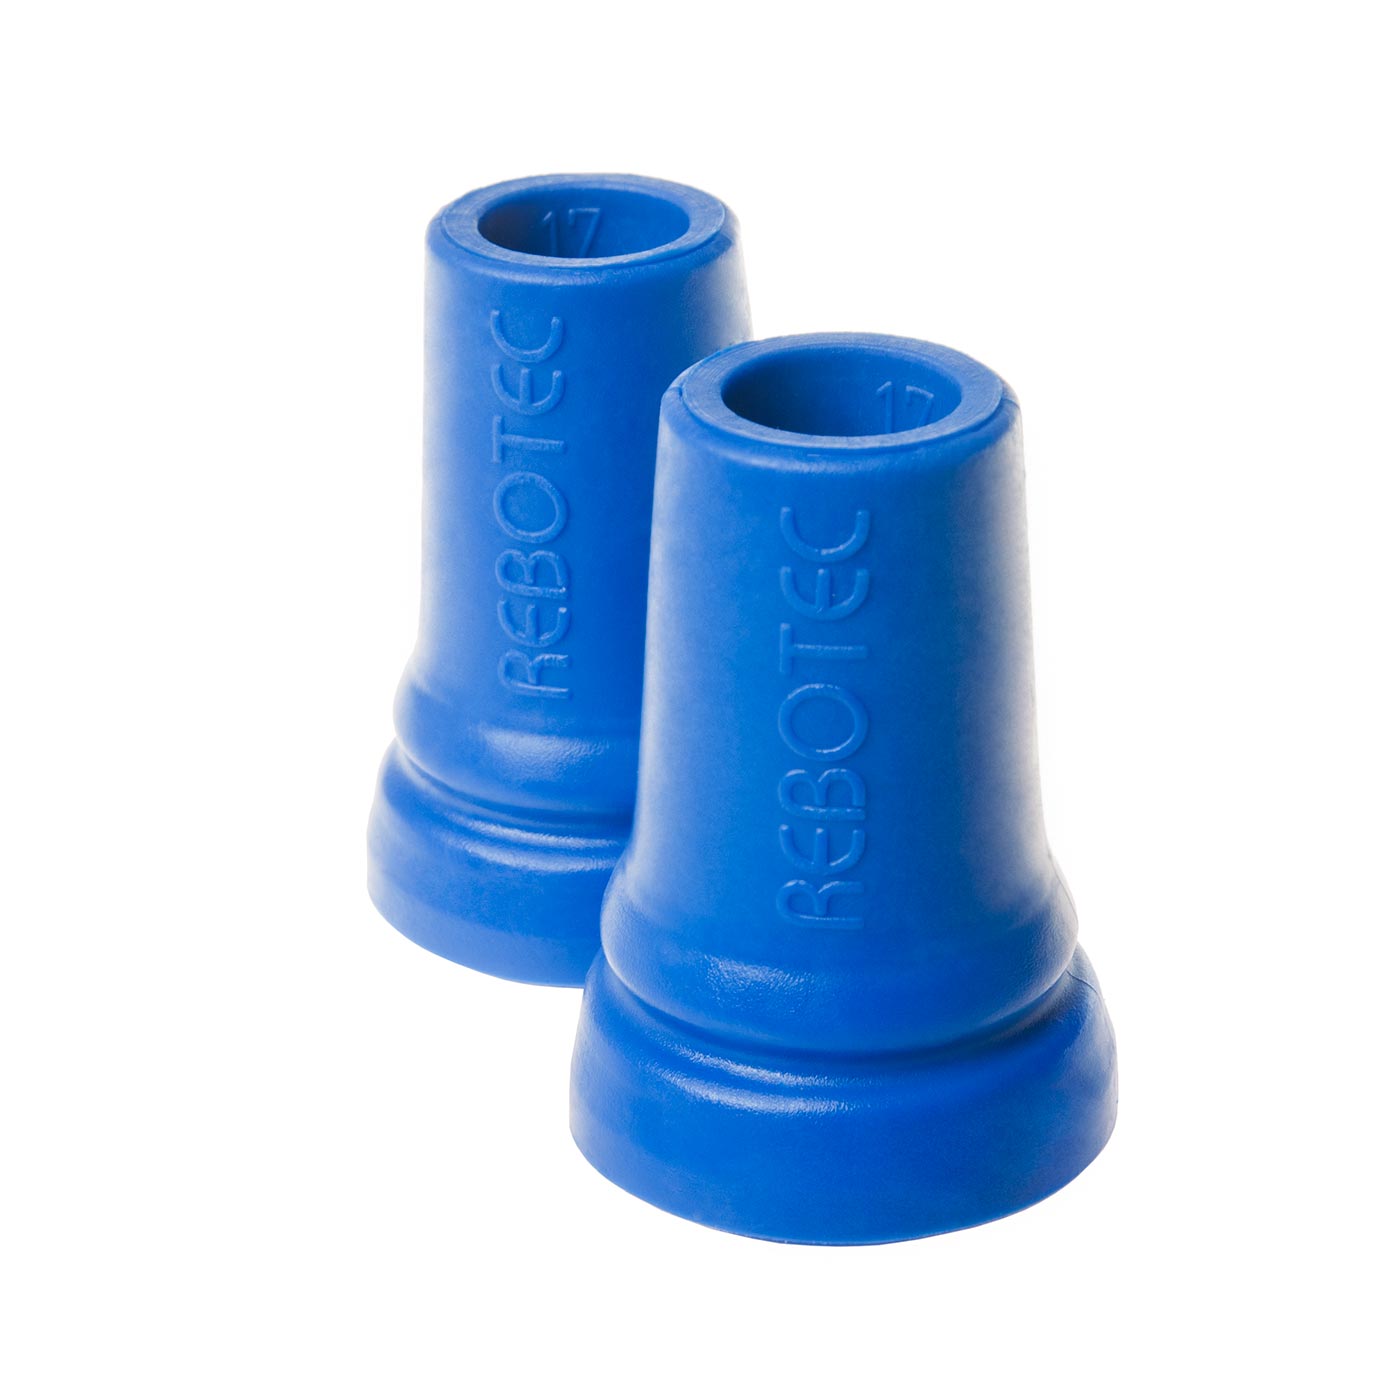 Rebotec 17mm Ferrules - Tips for Crutches - Blue